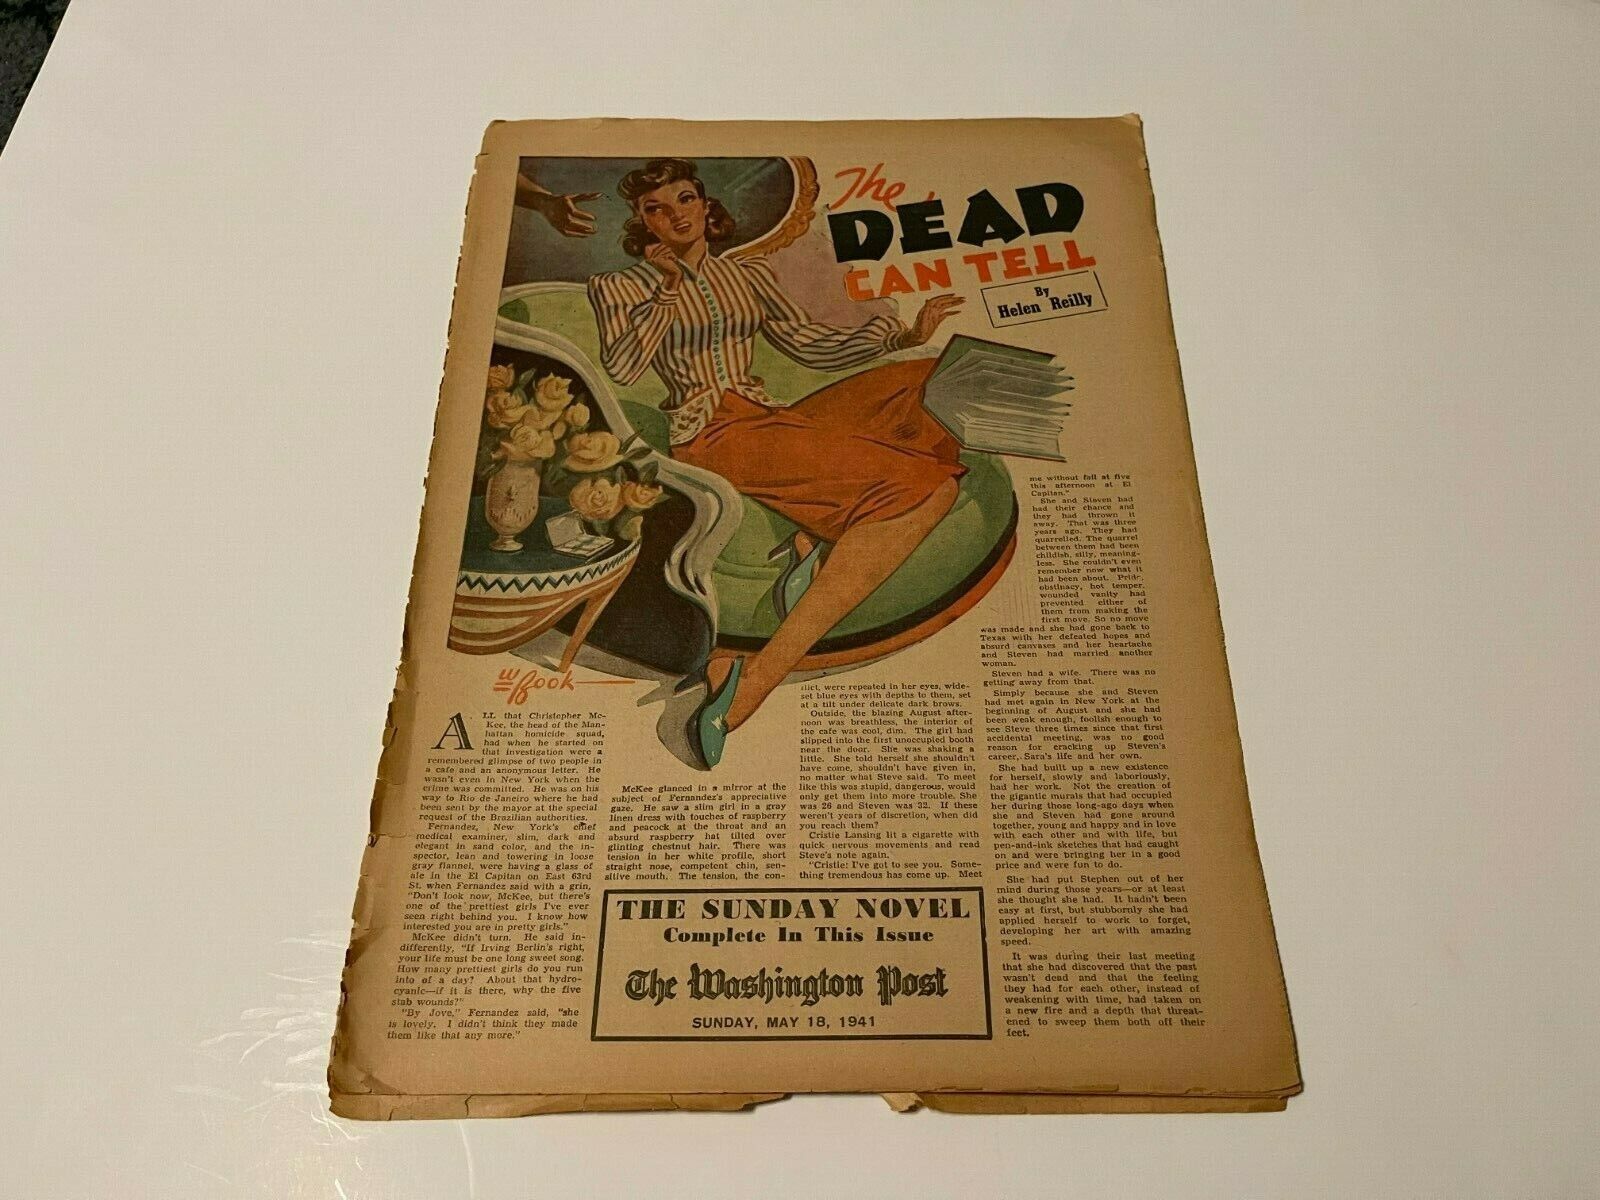 THE DEAD CAN TELL, 1941 washington post sunday novel, HELEN REILLY,MAY 18 1941